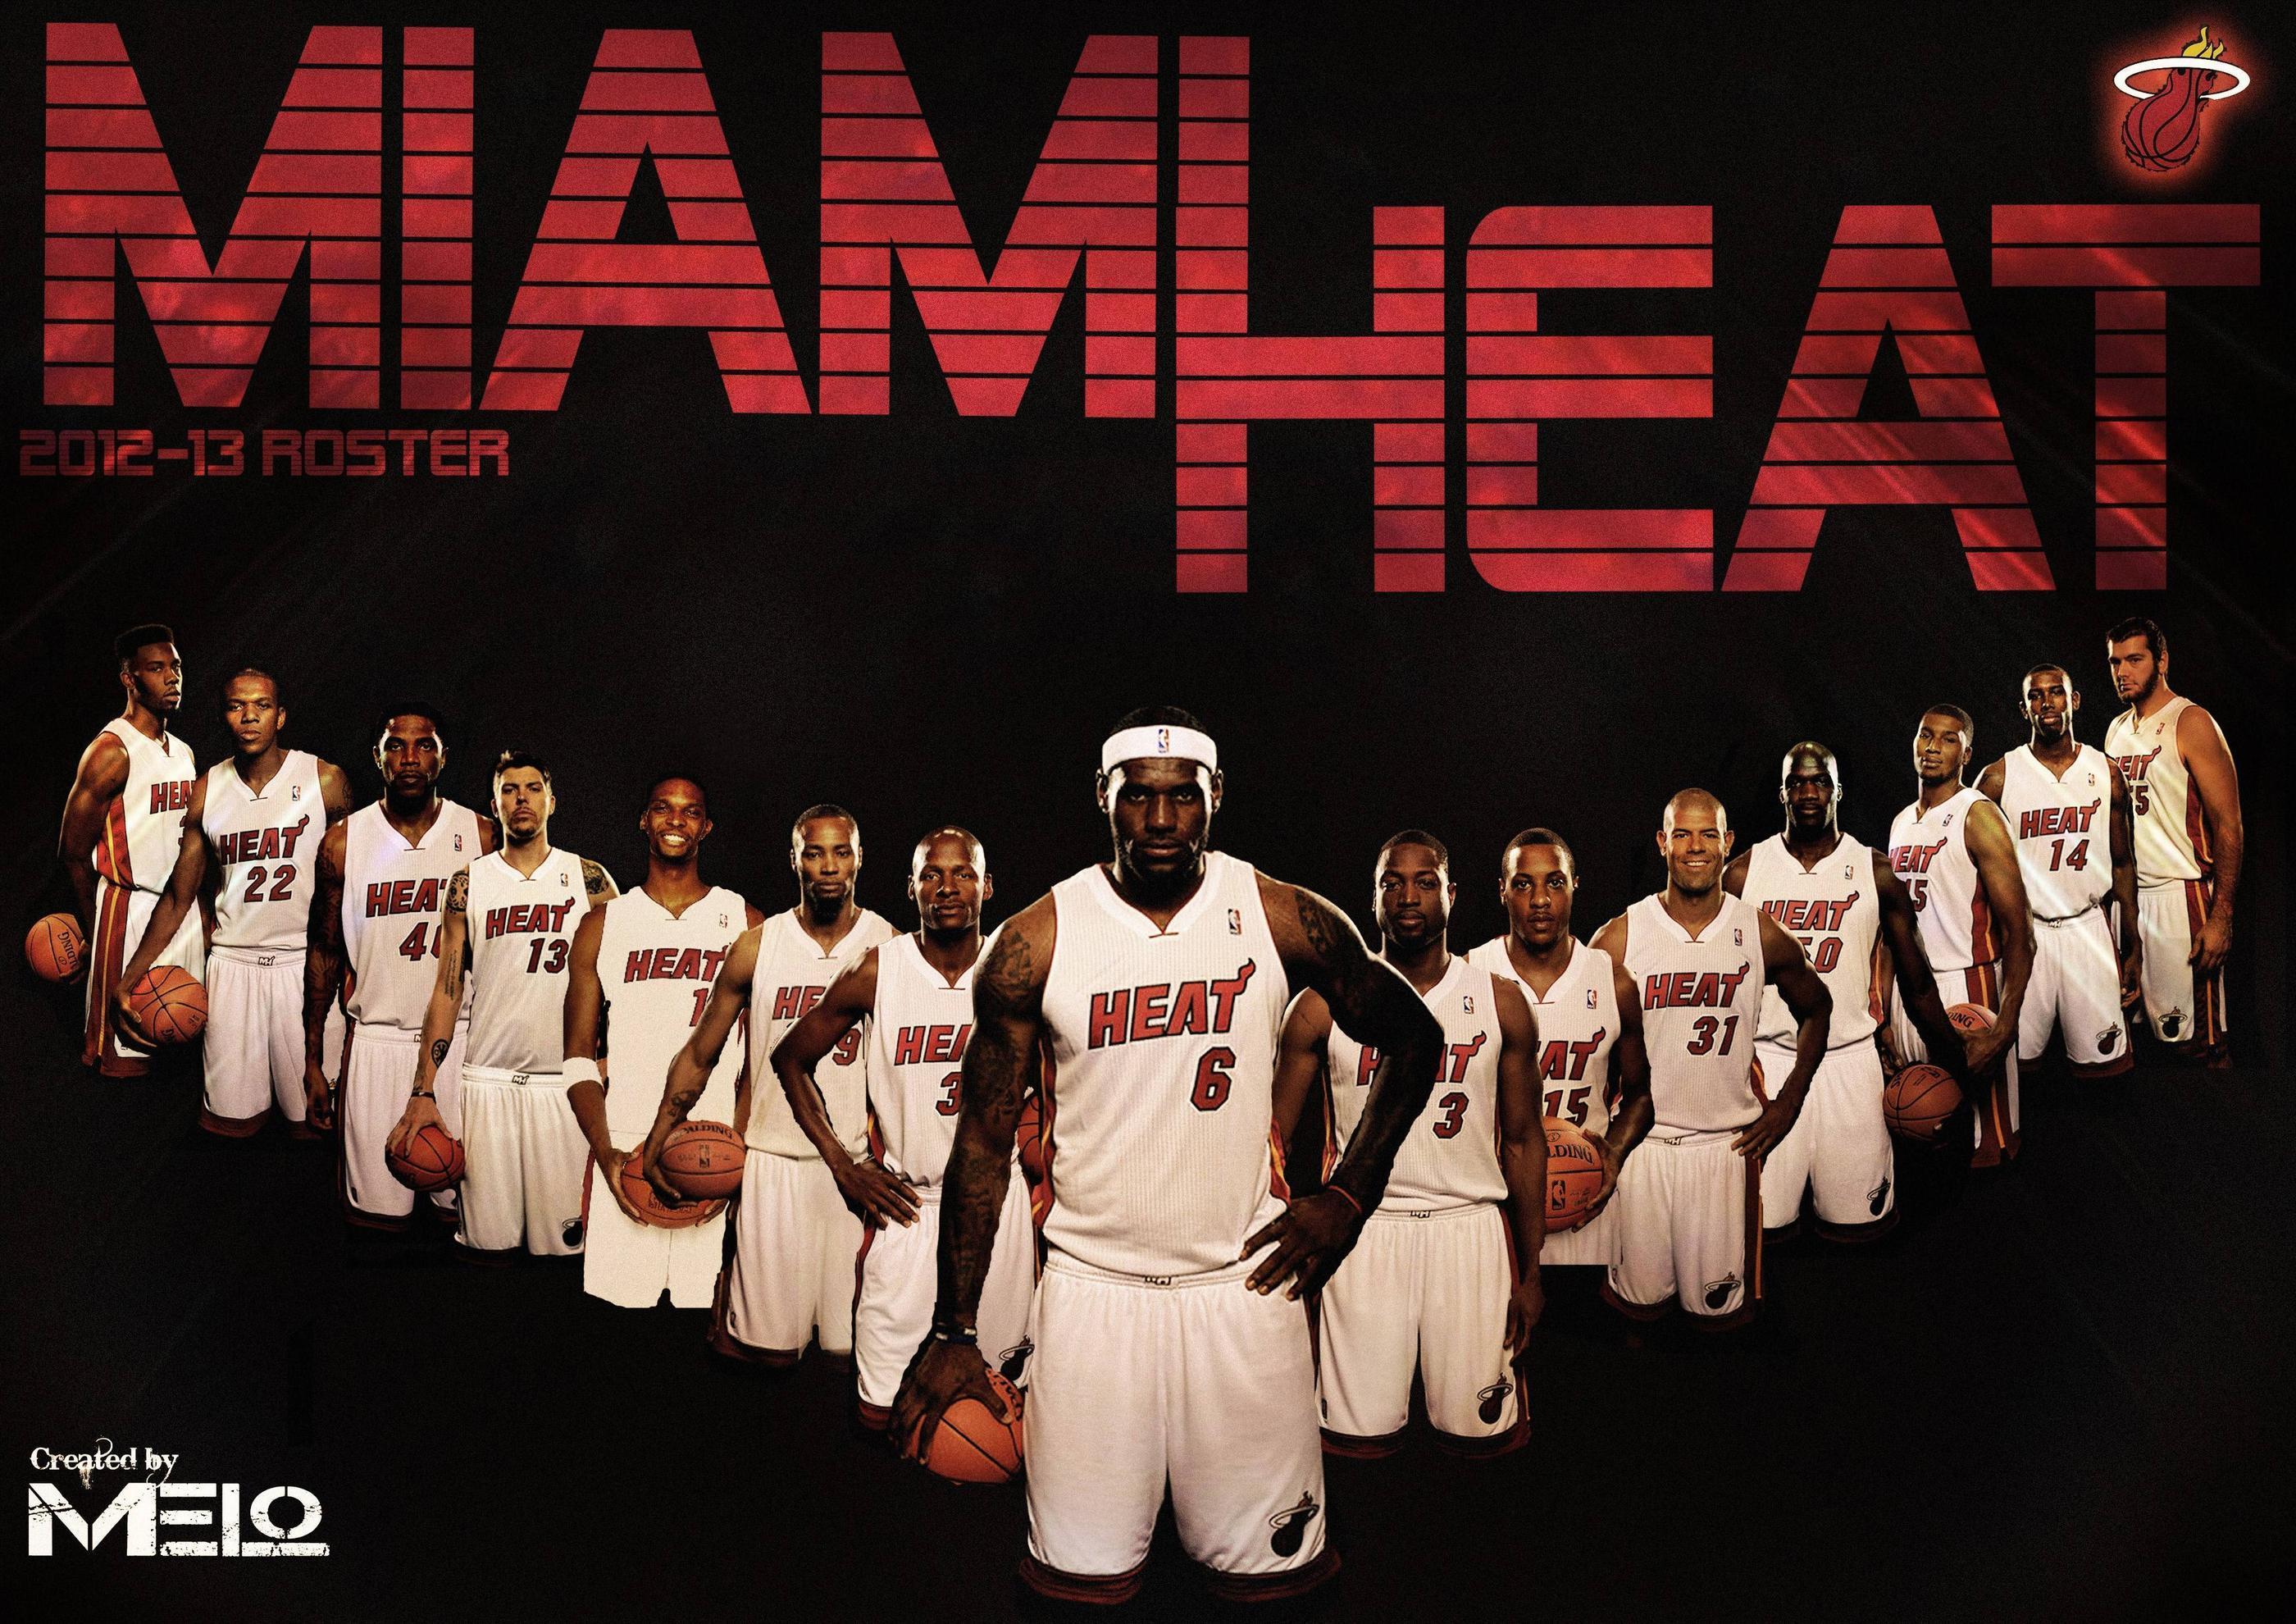 The Miami Heat Wallpaper. Hdwidescreens